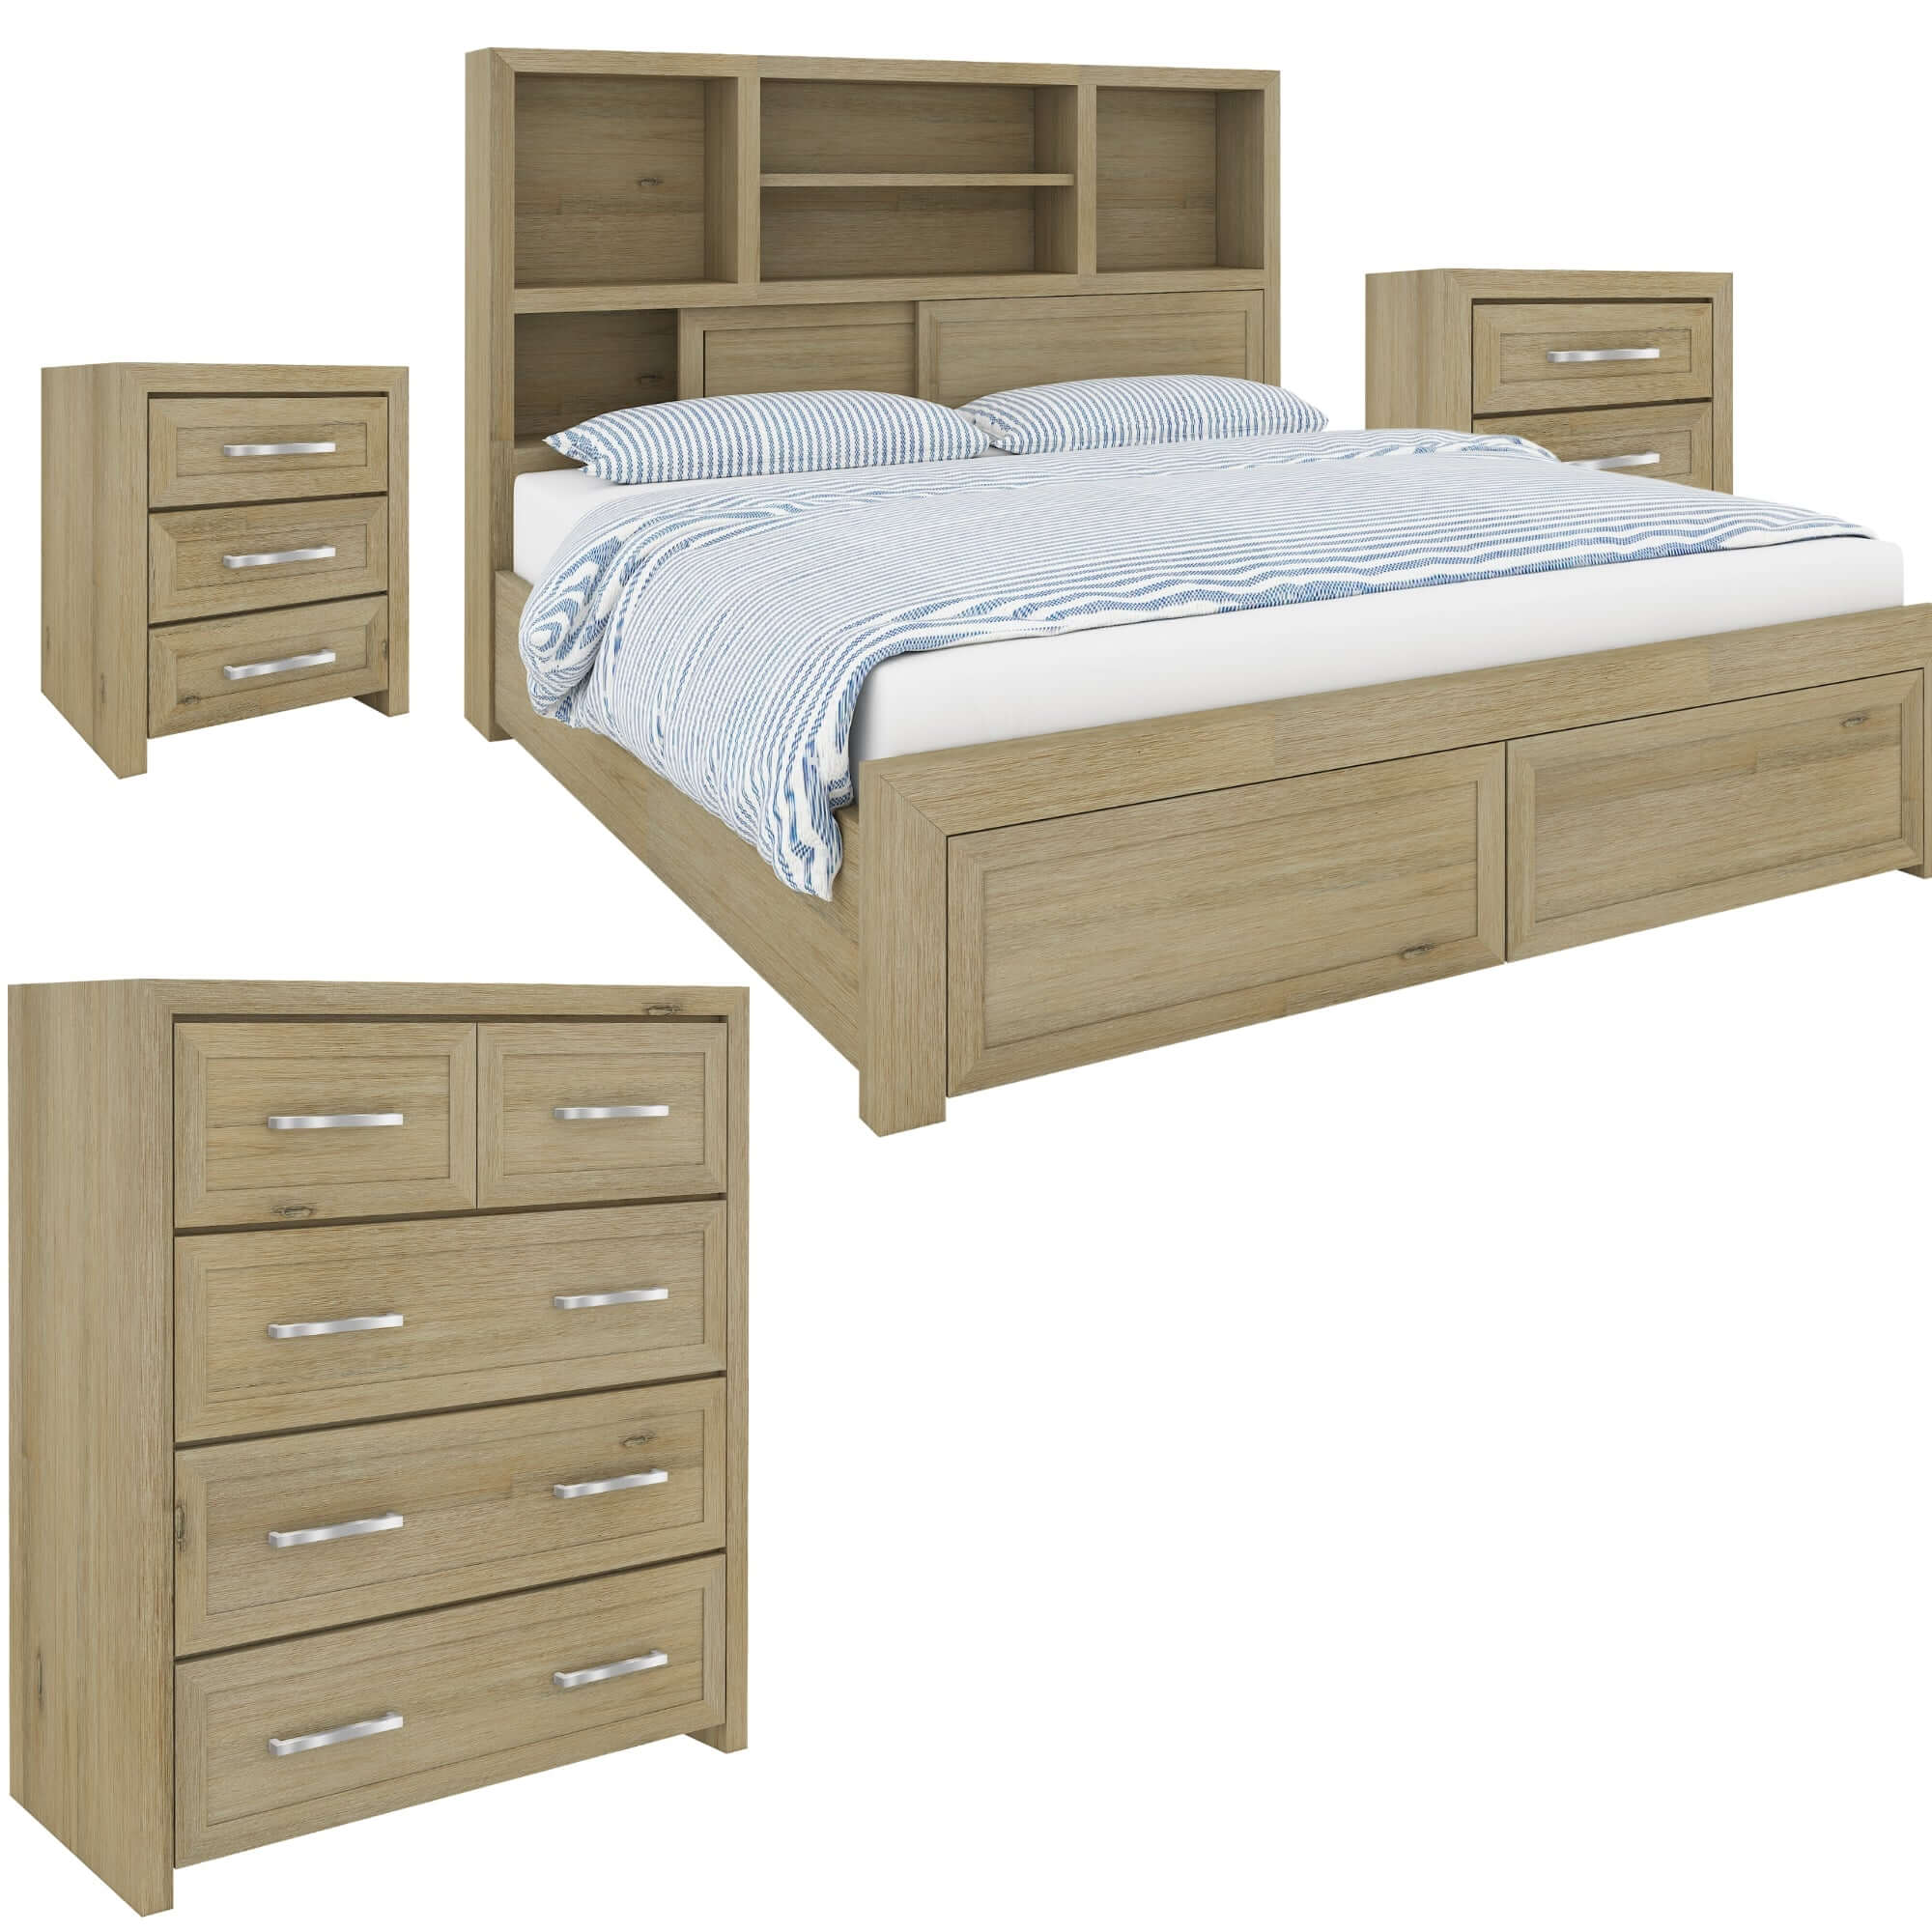 Gracelyn Bedside Nightstand 3 Drawers Storage Cabinet Bedroom Furniture - Smoke-Upinteriors